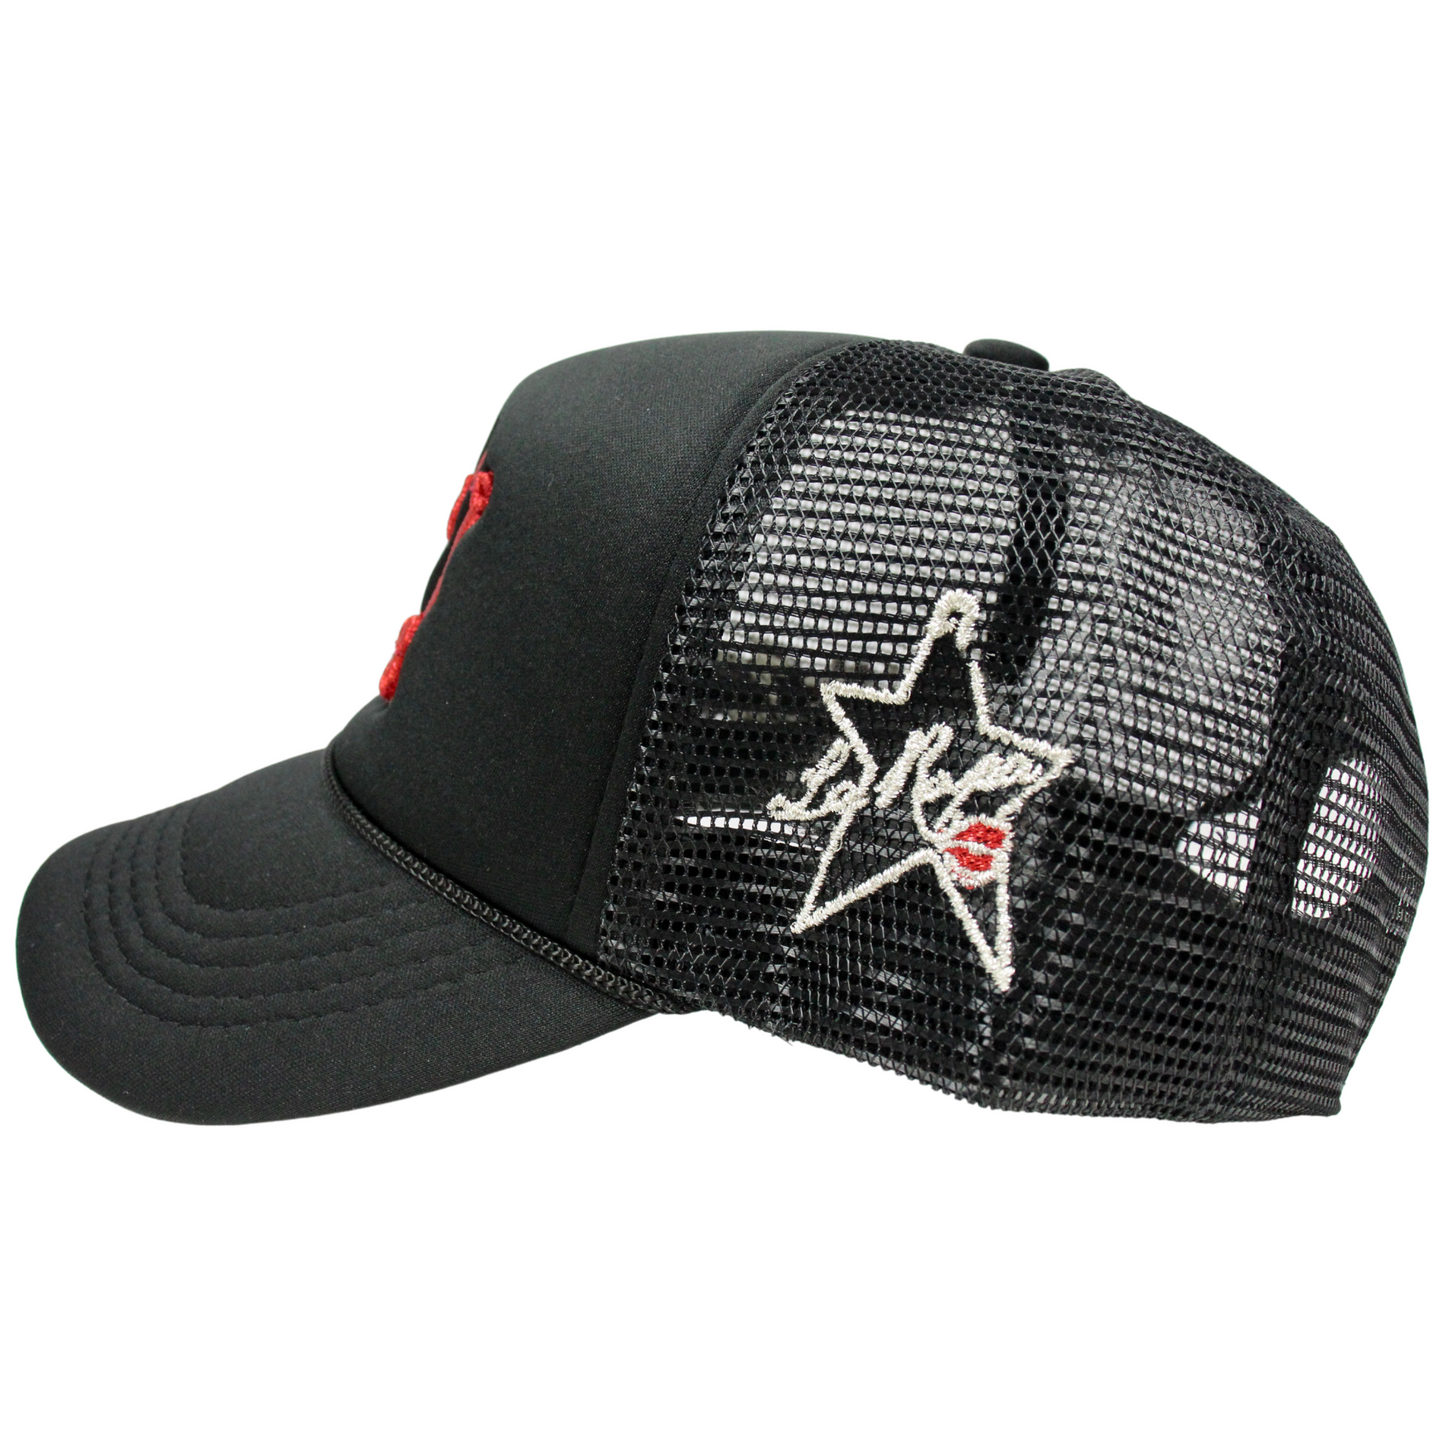 La Ropa NY Trucker Hat (Black/Red)